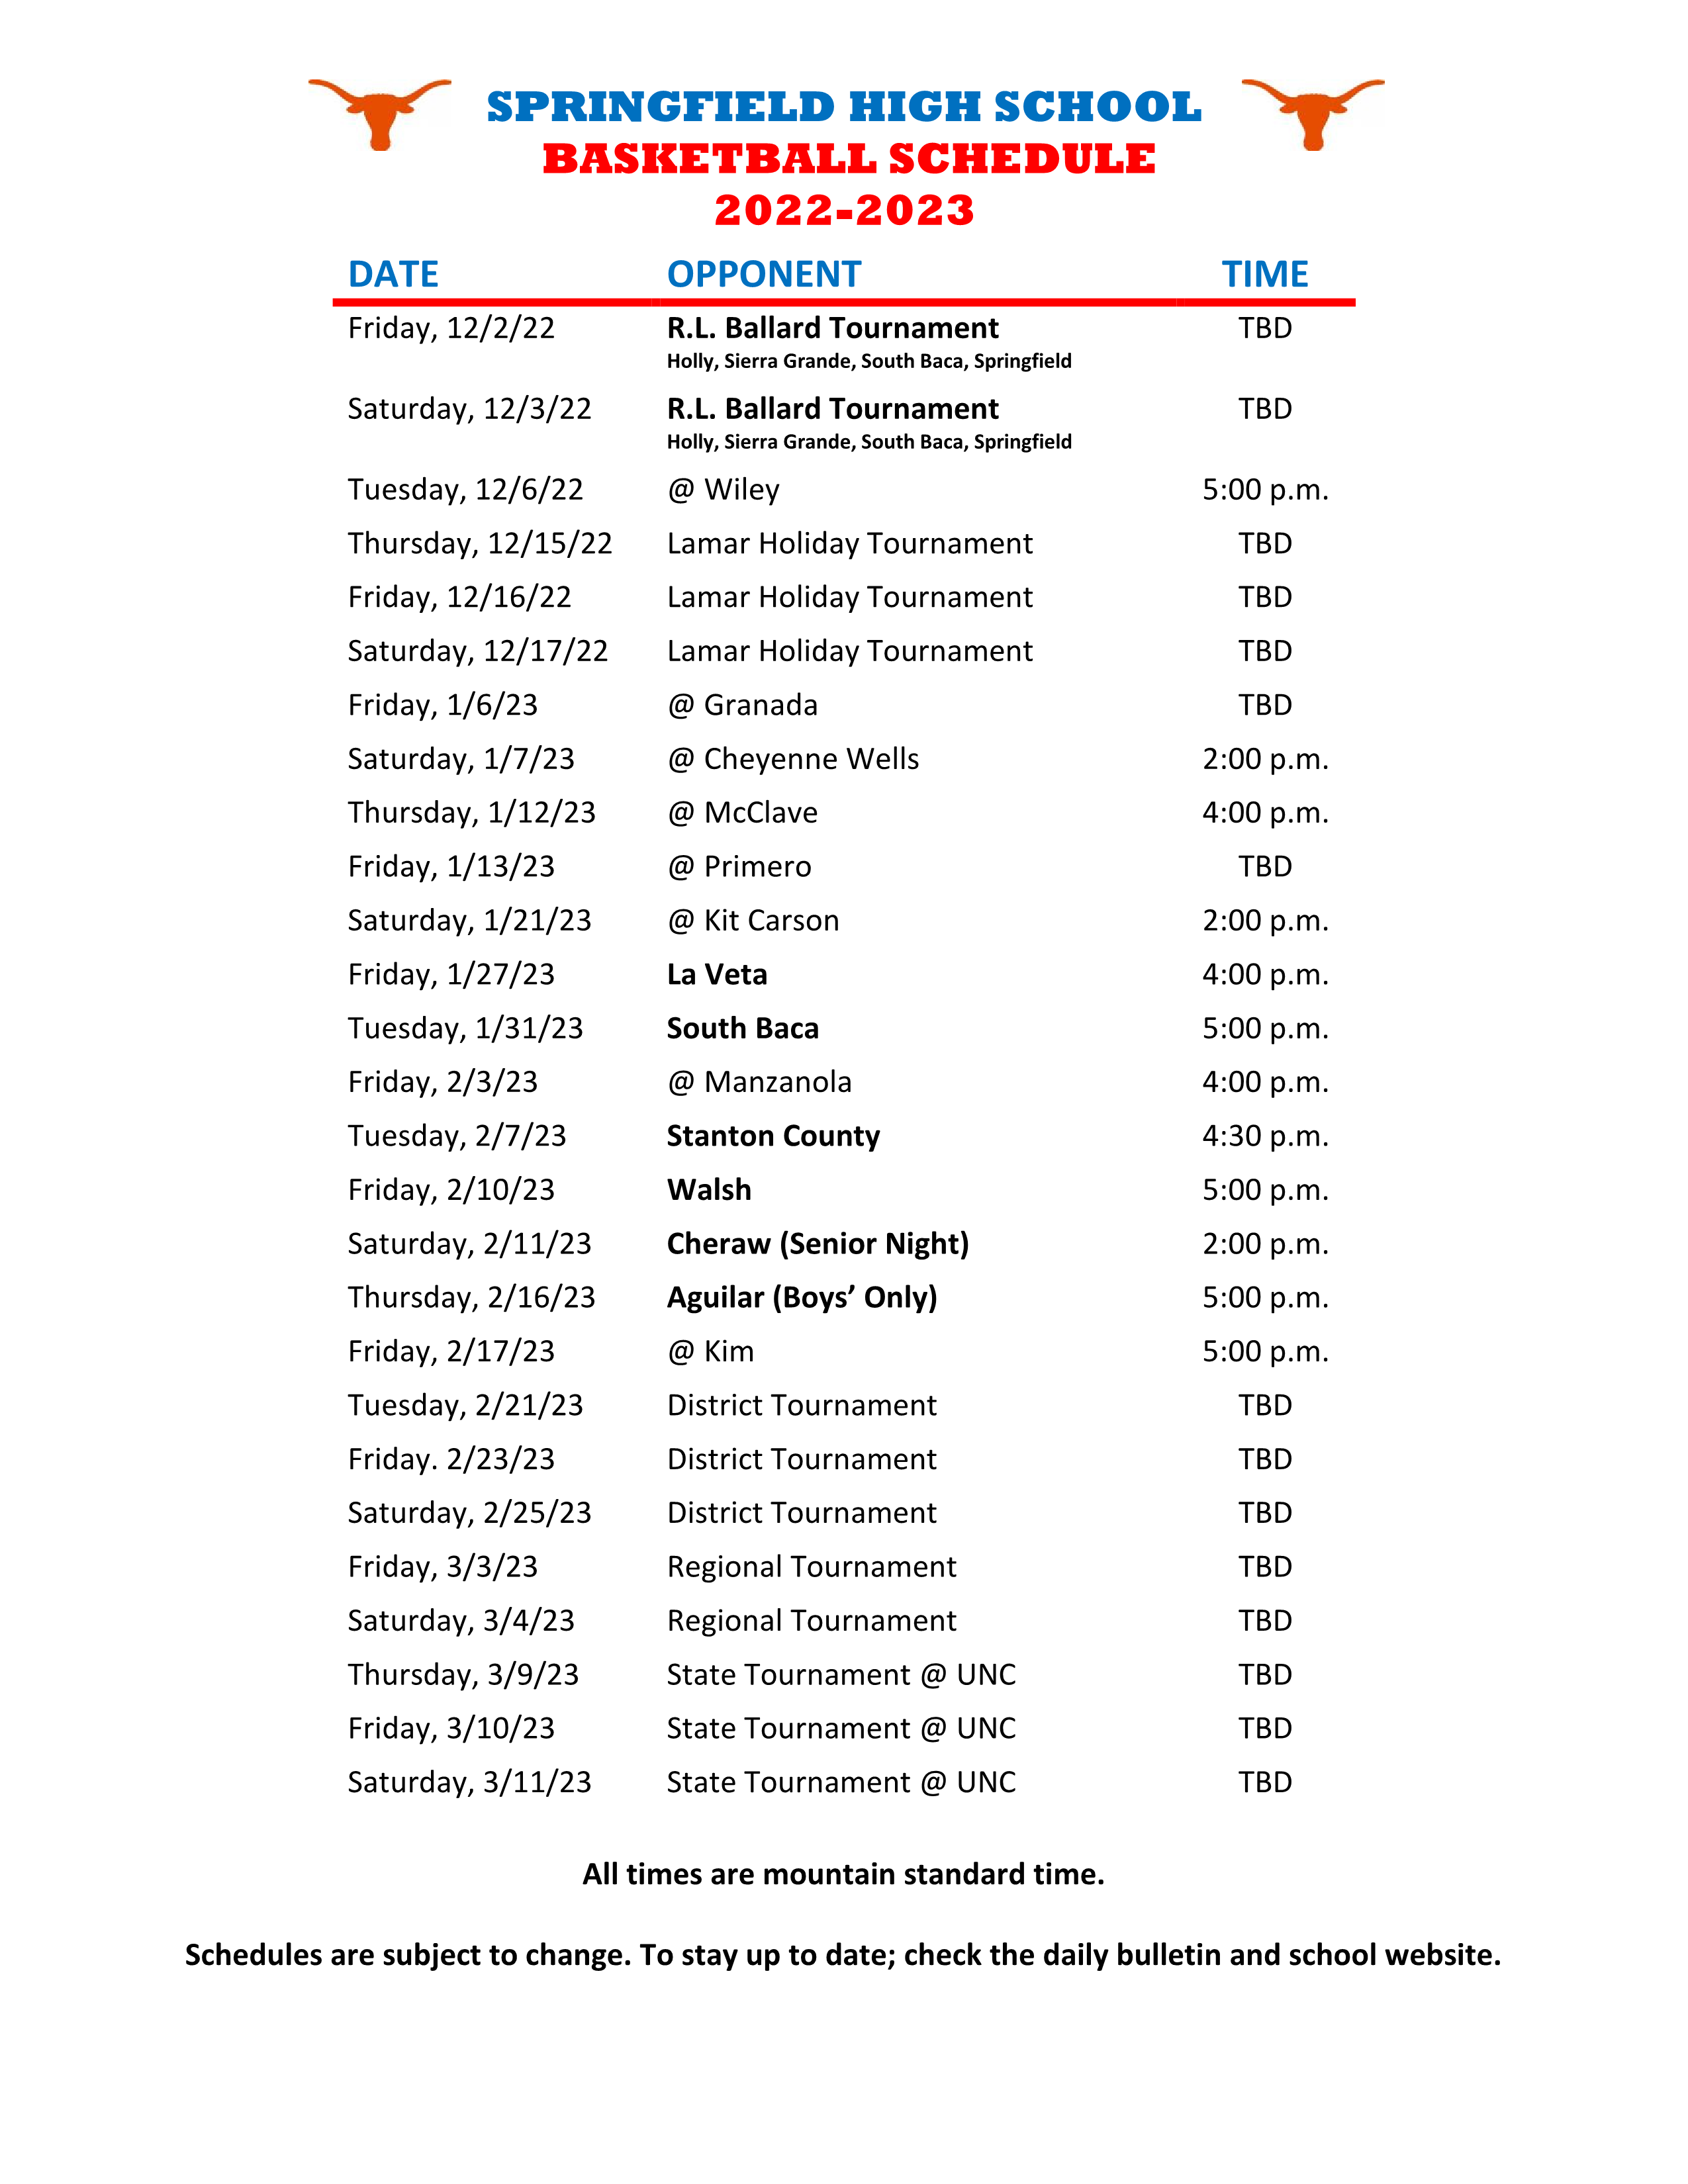 2022-2023 High School Basketball Schedule